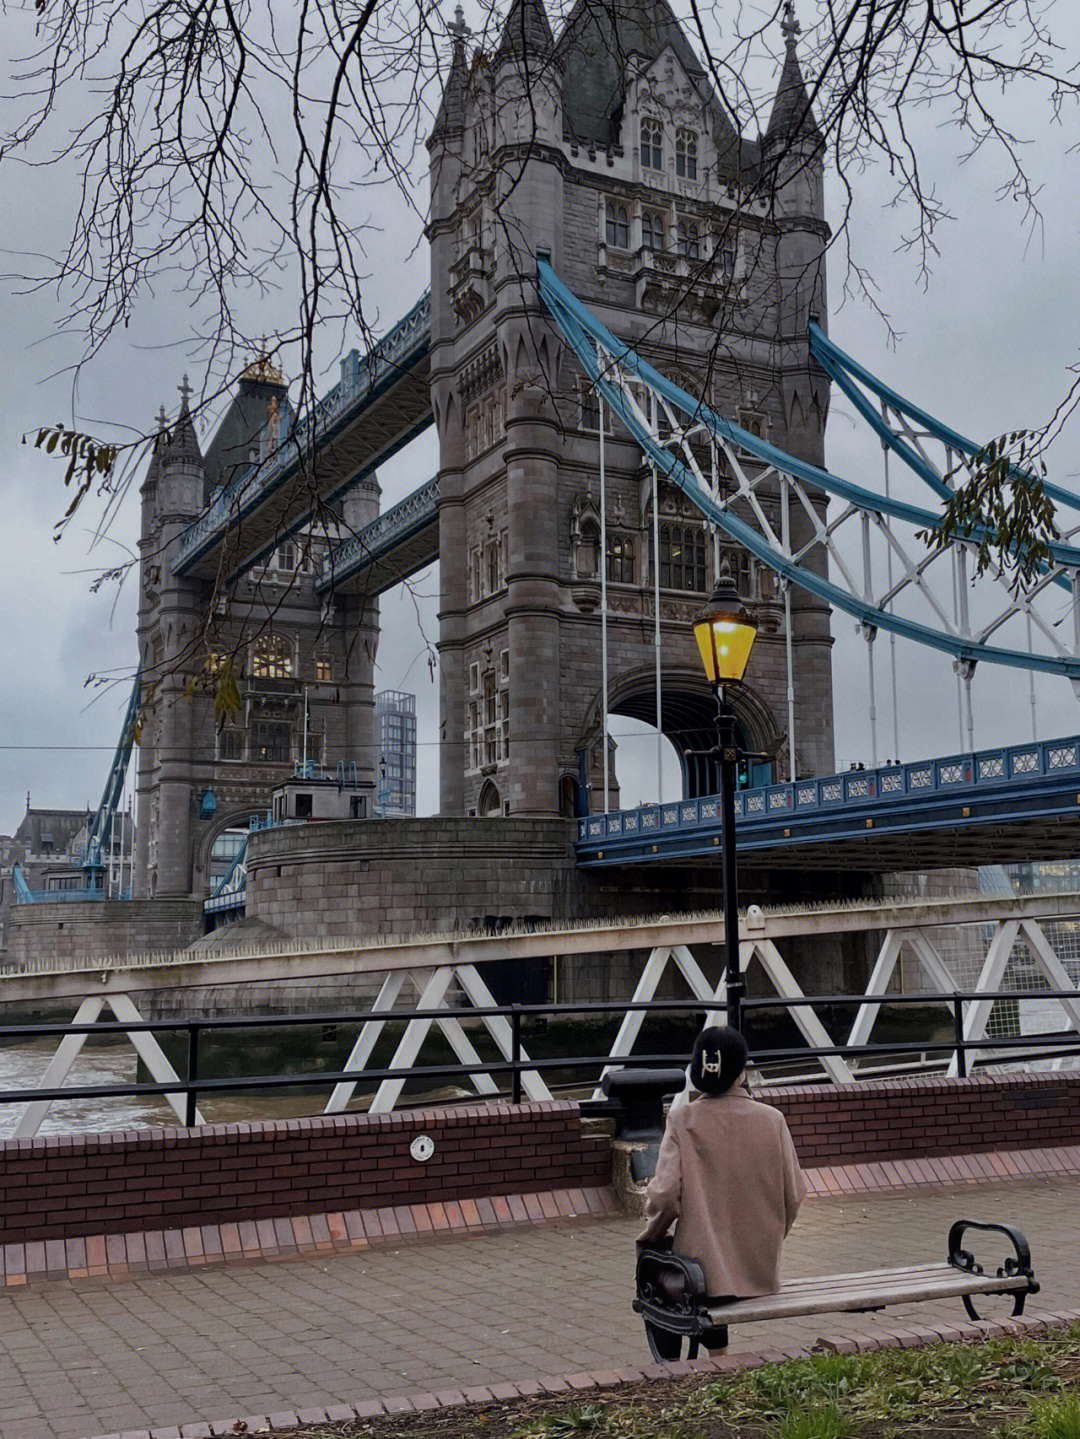 towerbridge伦敦塔桥最佳拍照点79必出大片